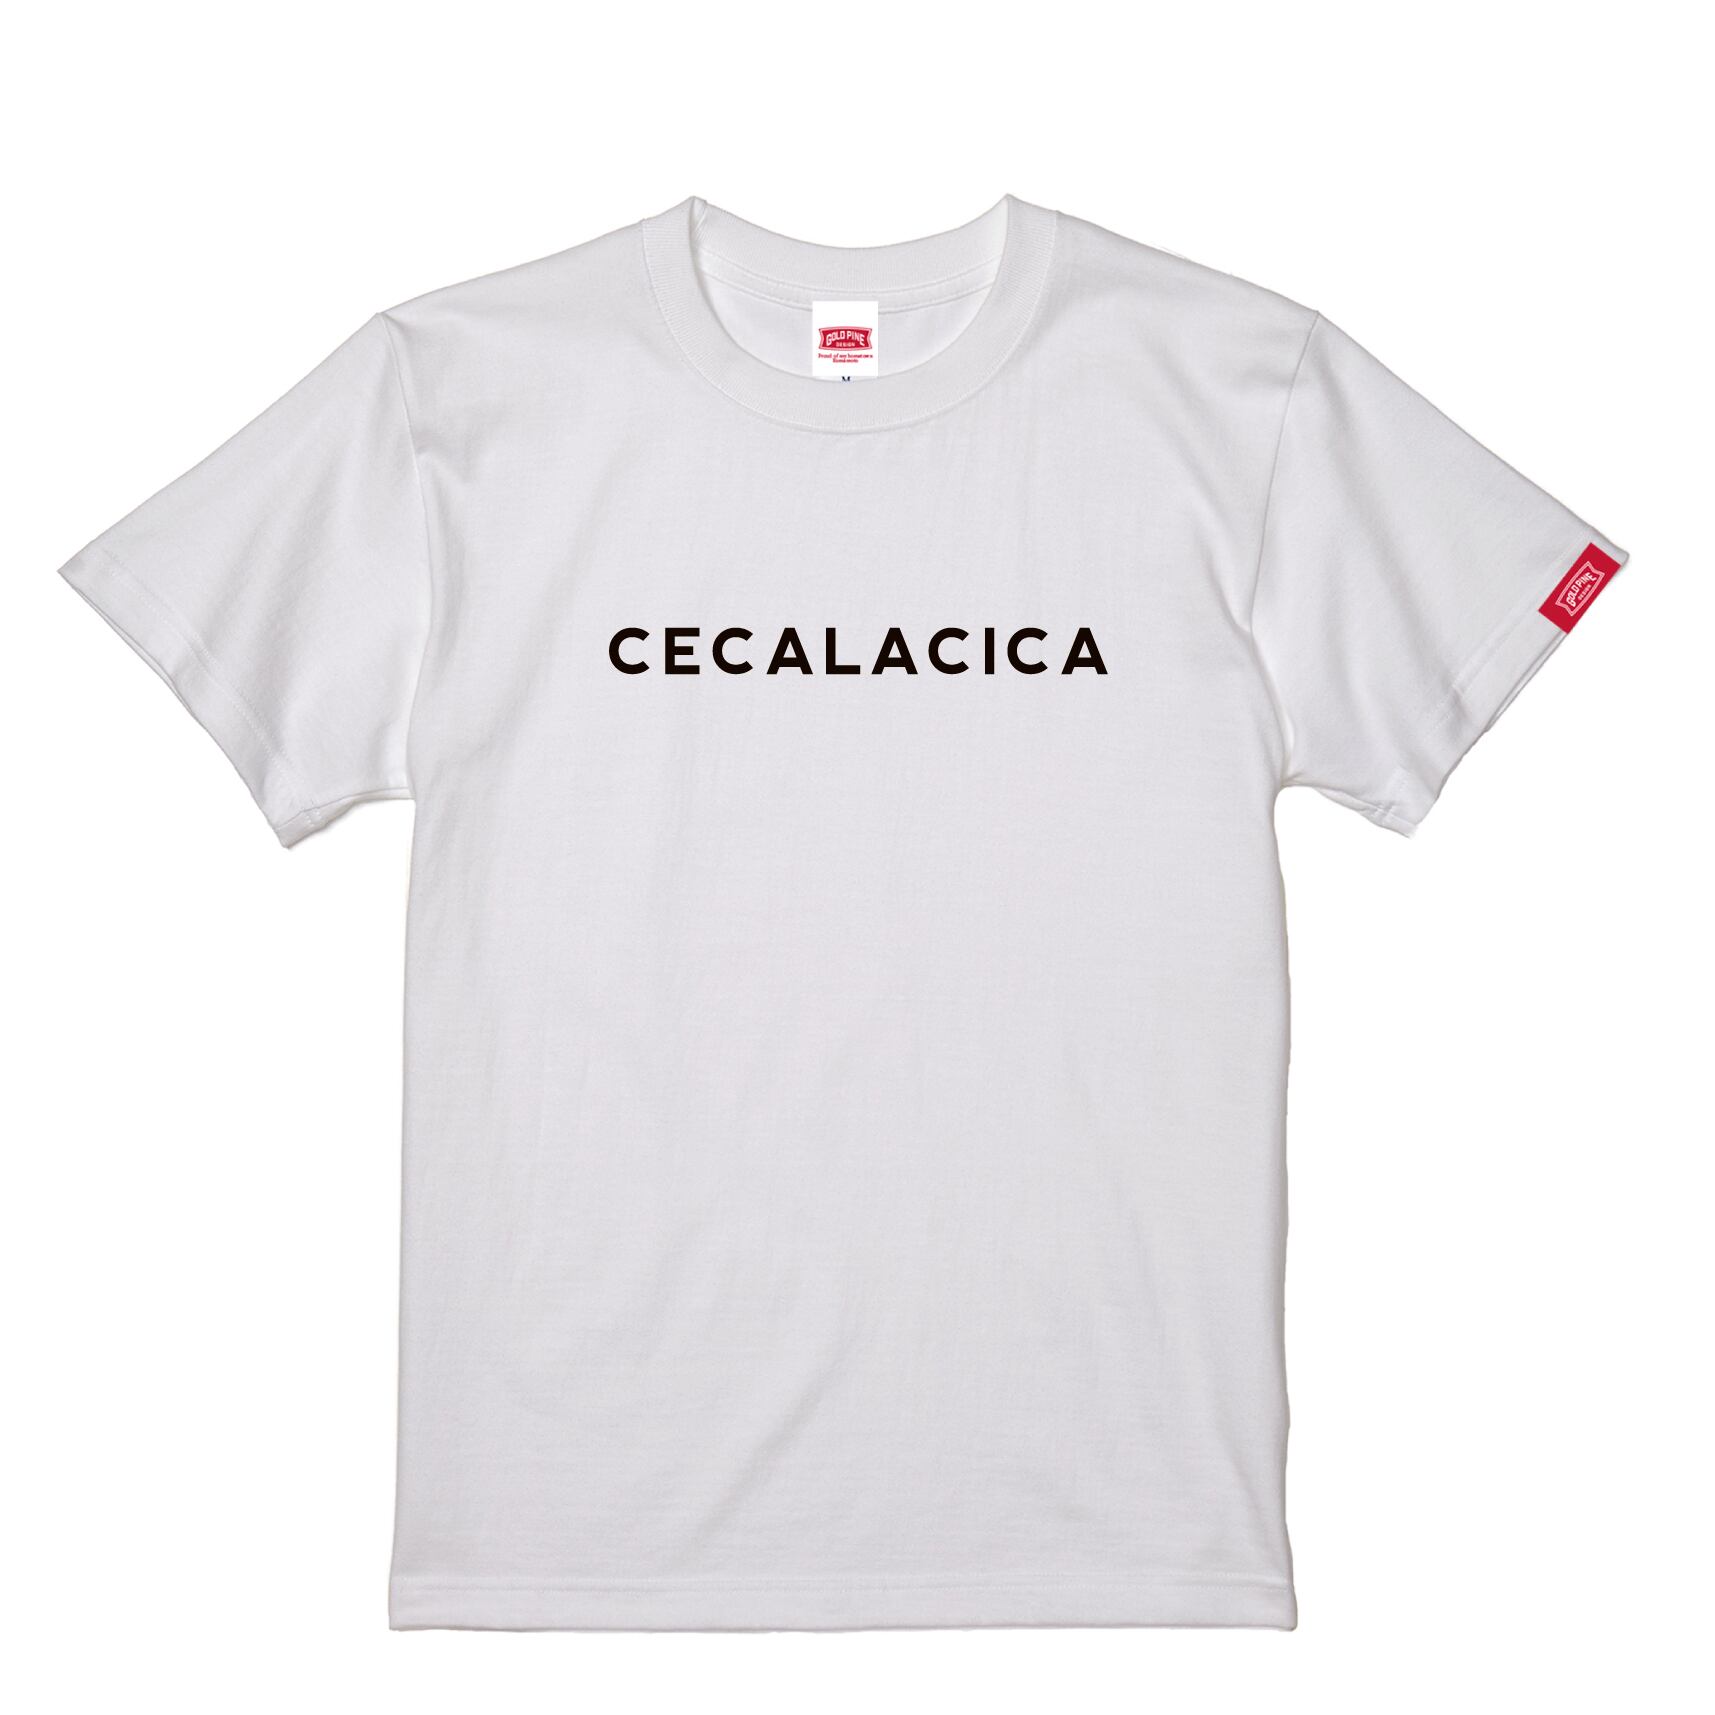 CECALCICA-Tshirt【Adult】White